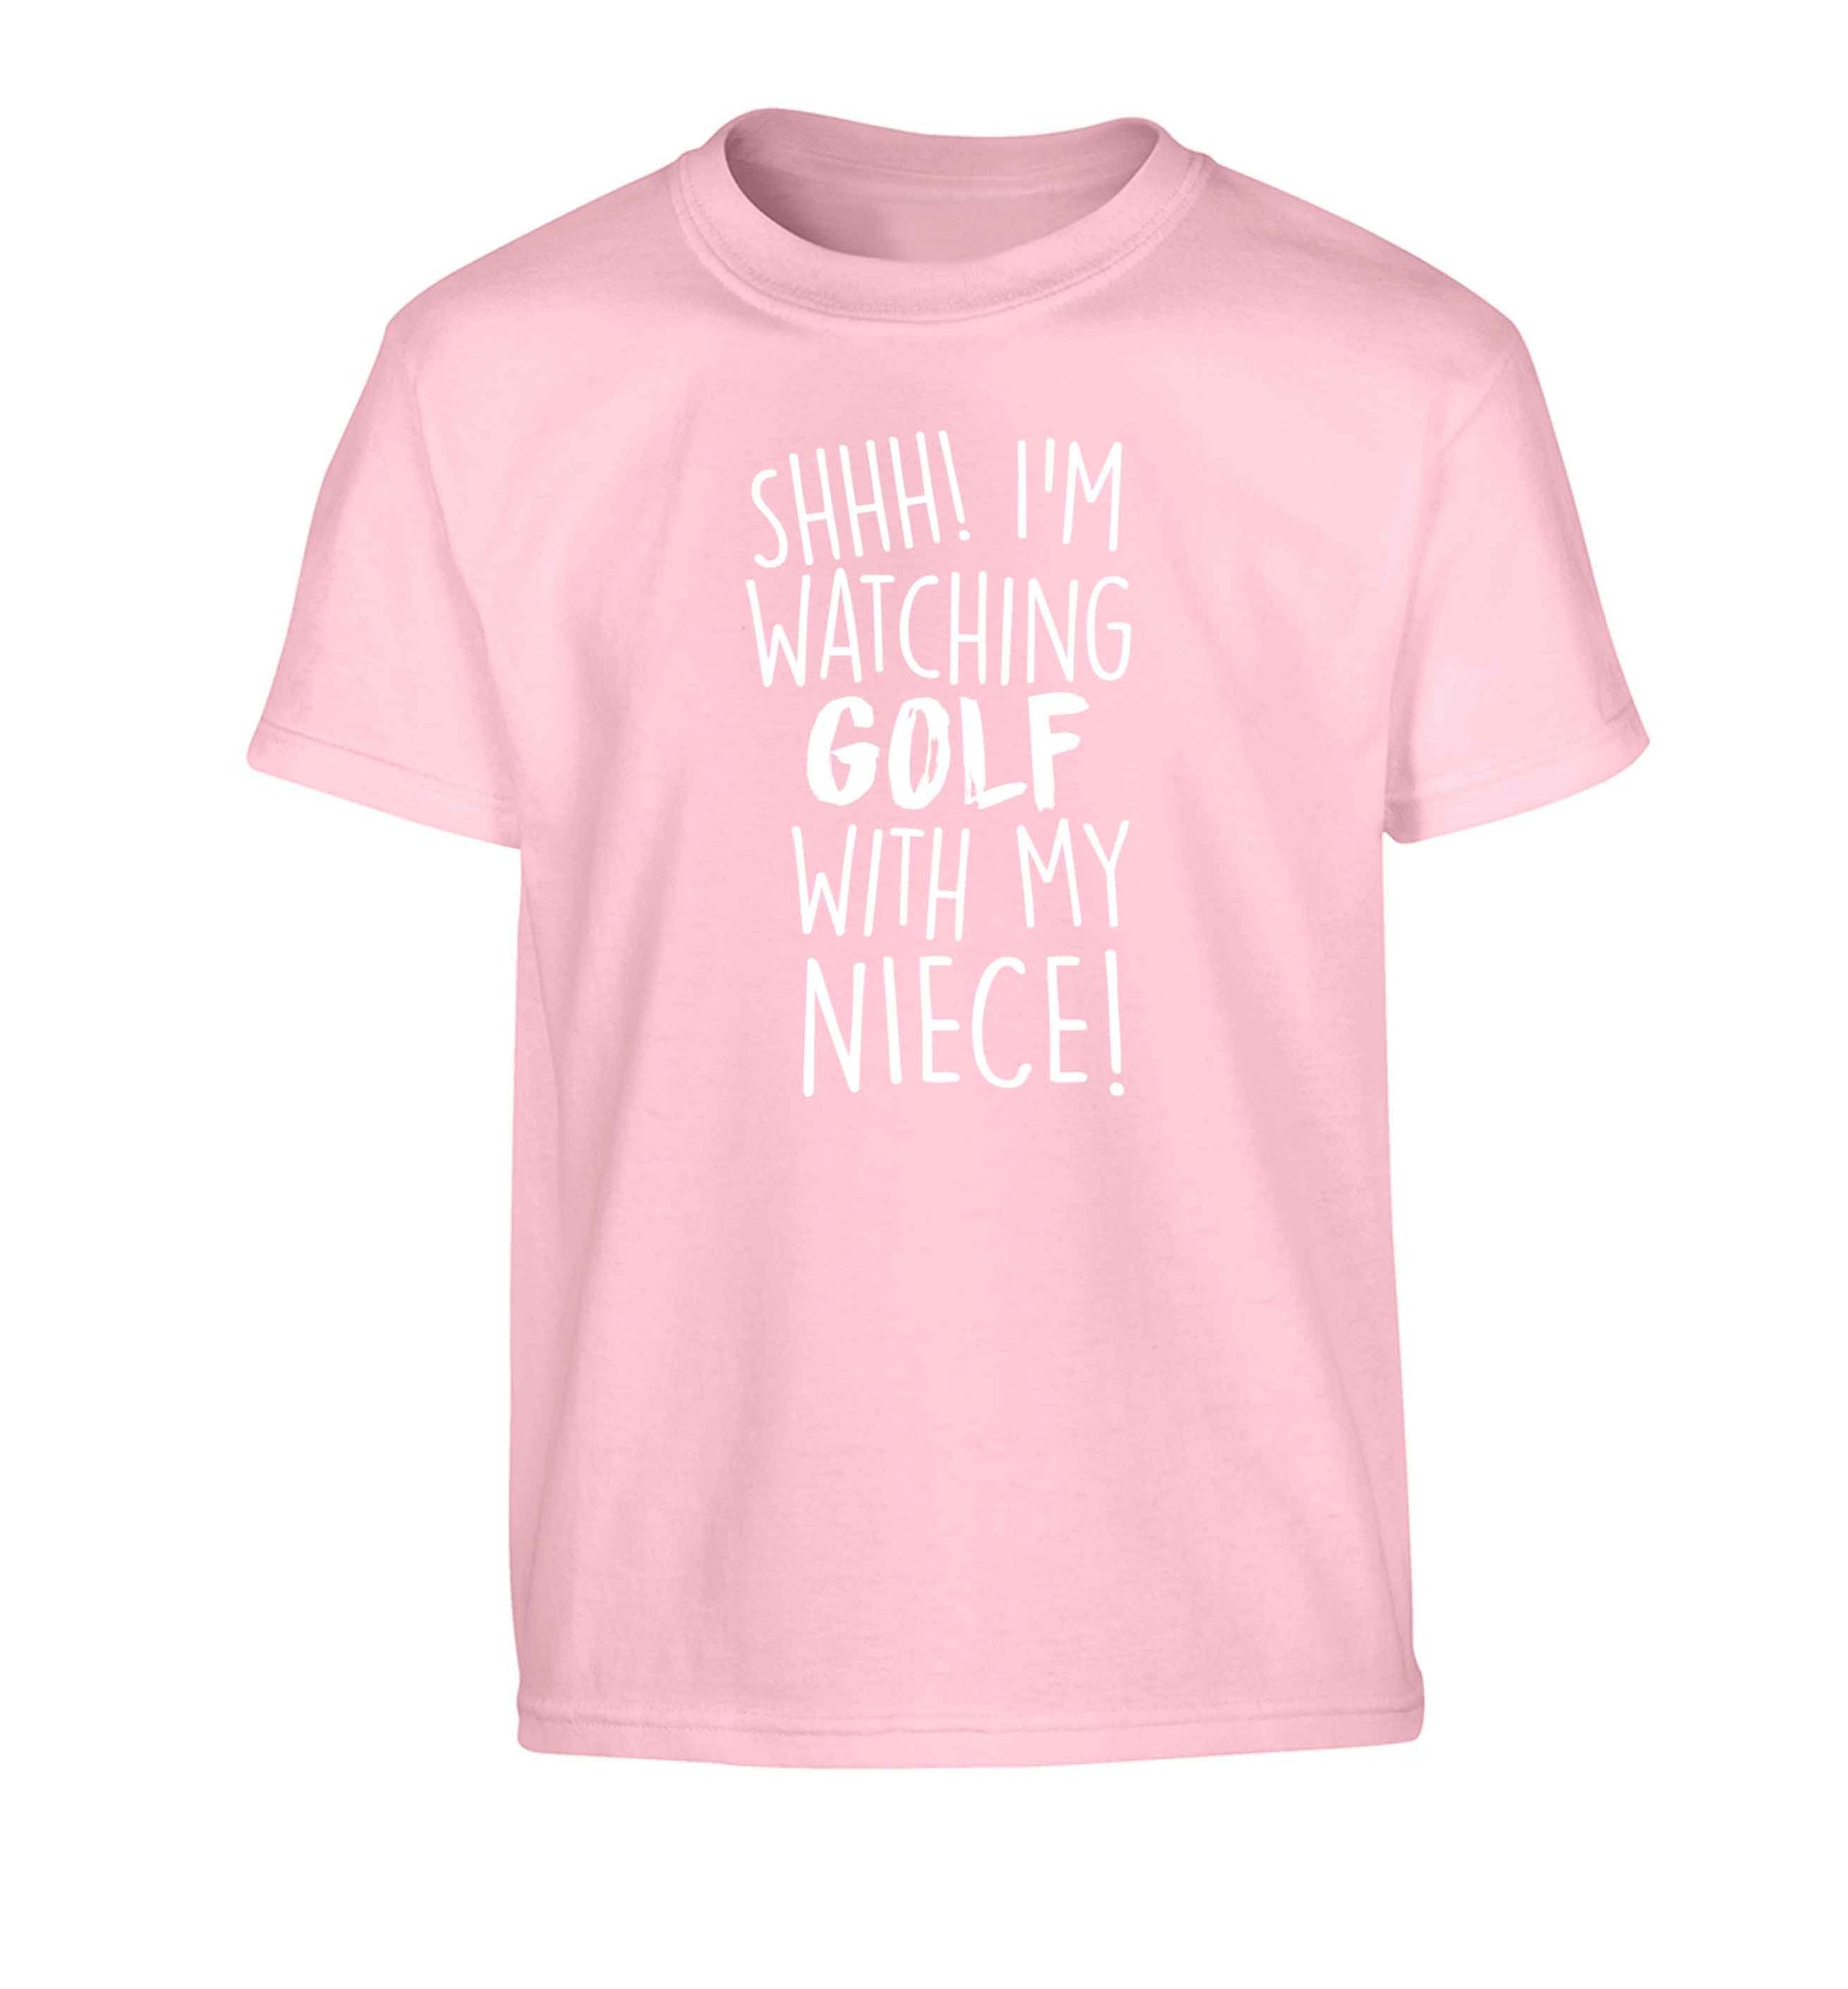 Shh I'm watching golf with my niece Children's light pink Tshirt 12-13 Years